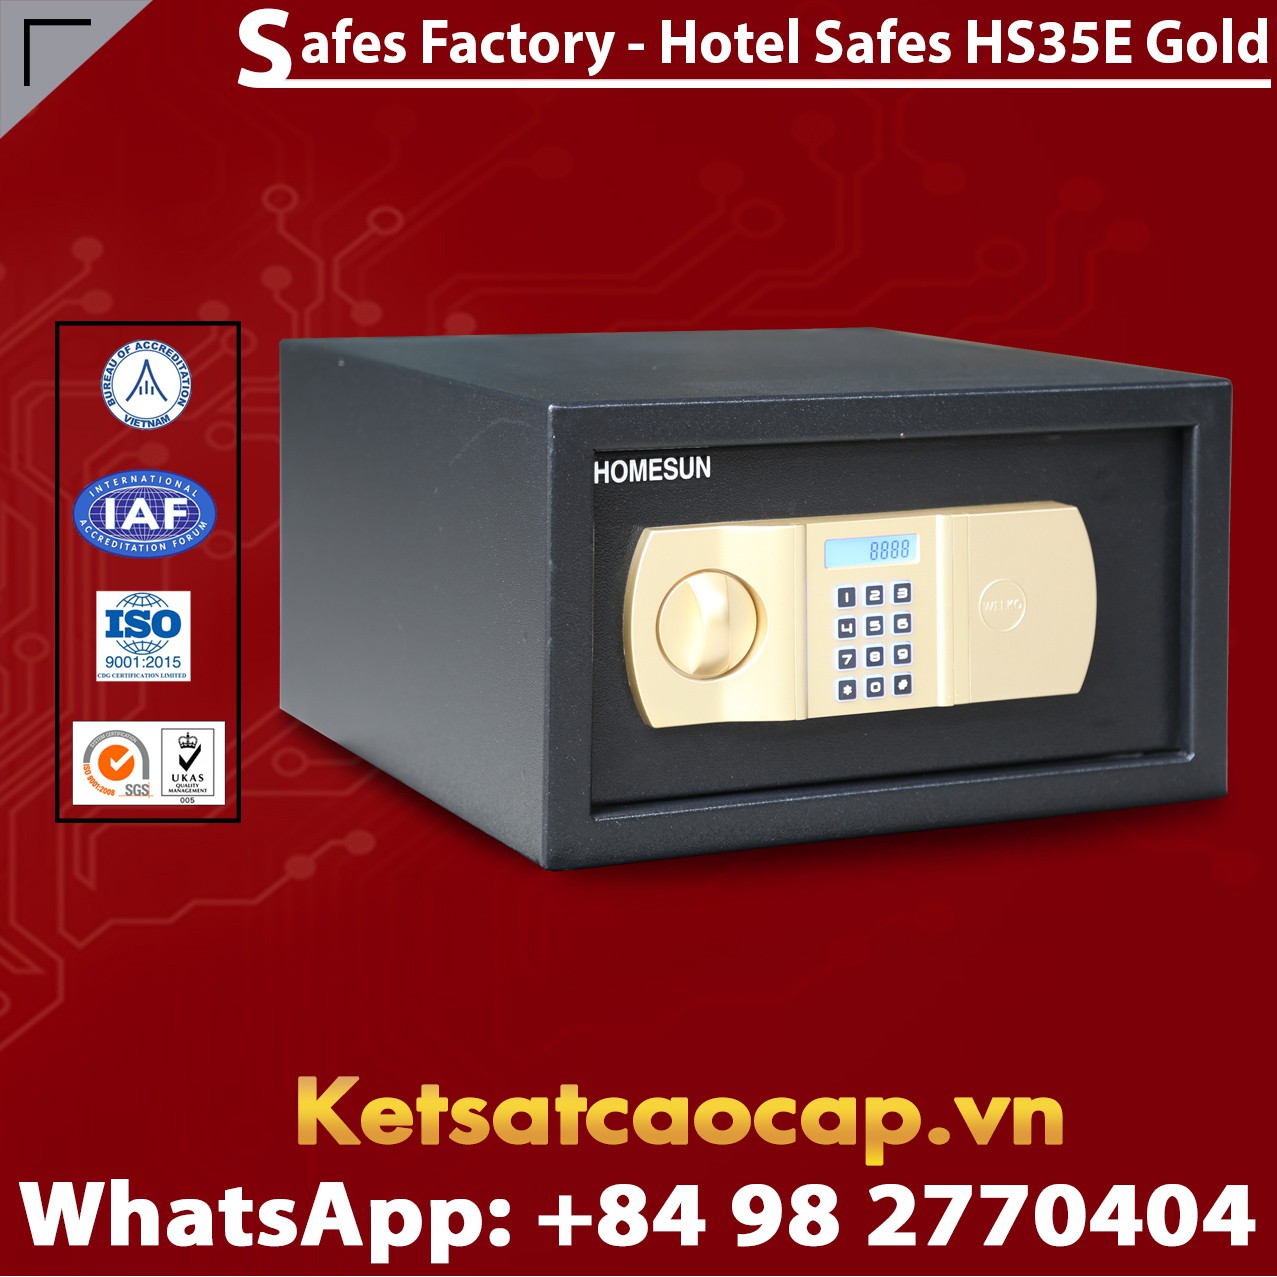 Hotel Room Security HOMESUN HS35 E Gold